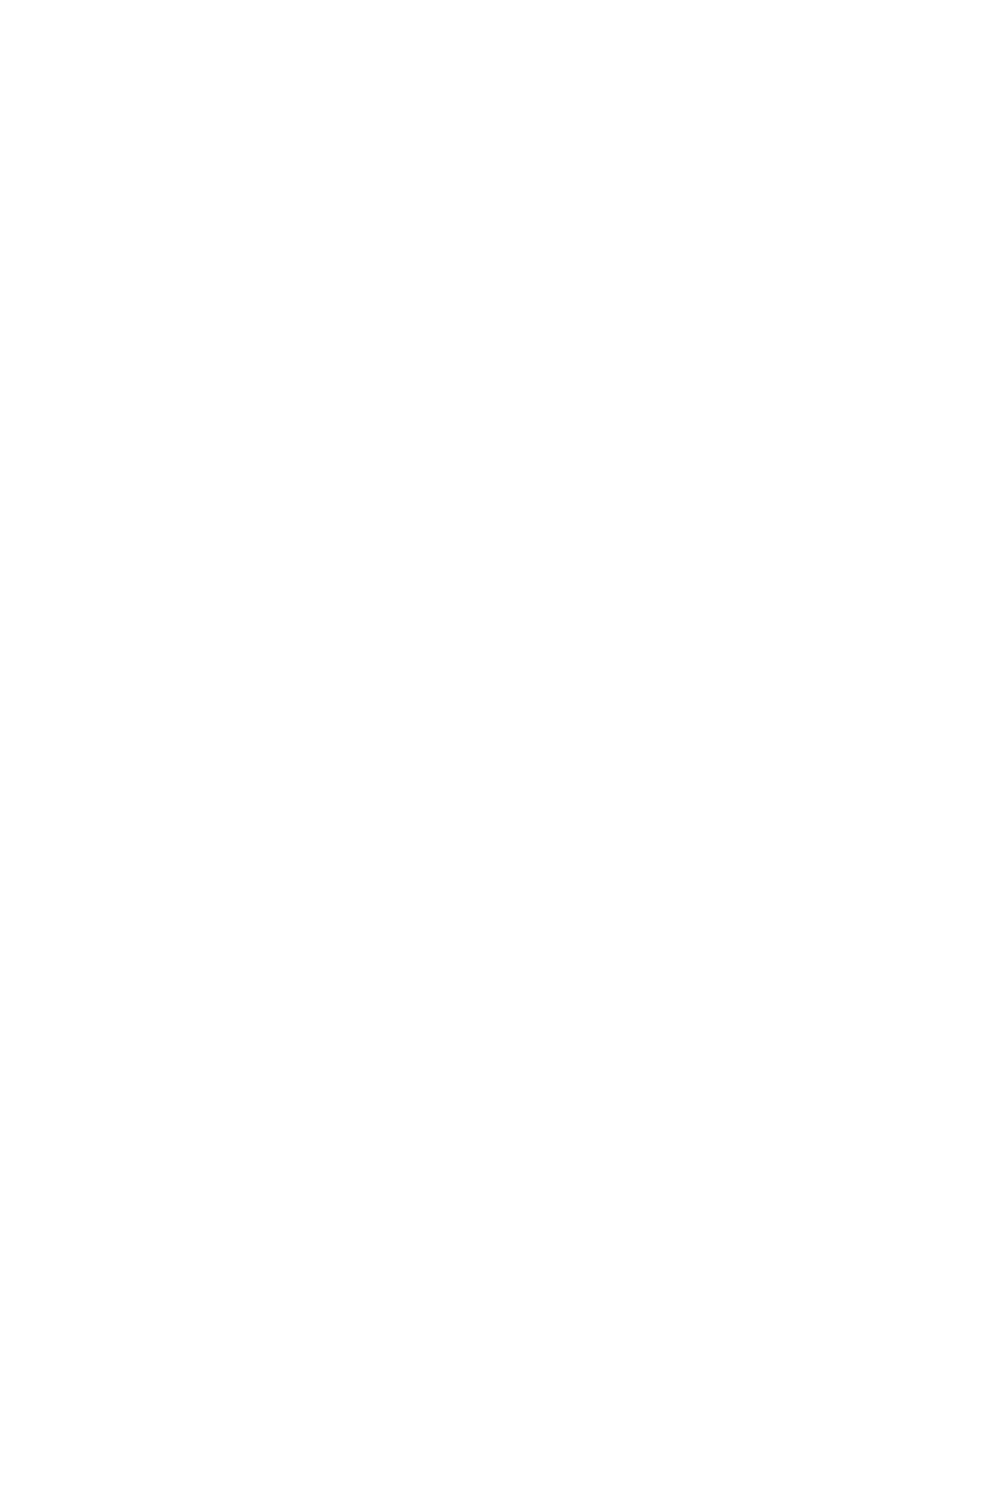 Getty Images logo for dark backgrounds (transparent PNG)